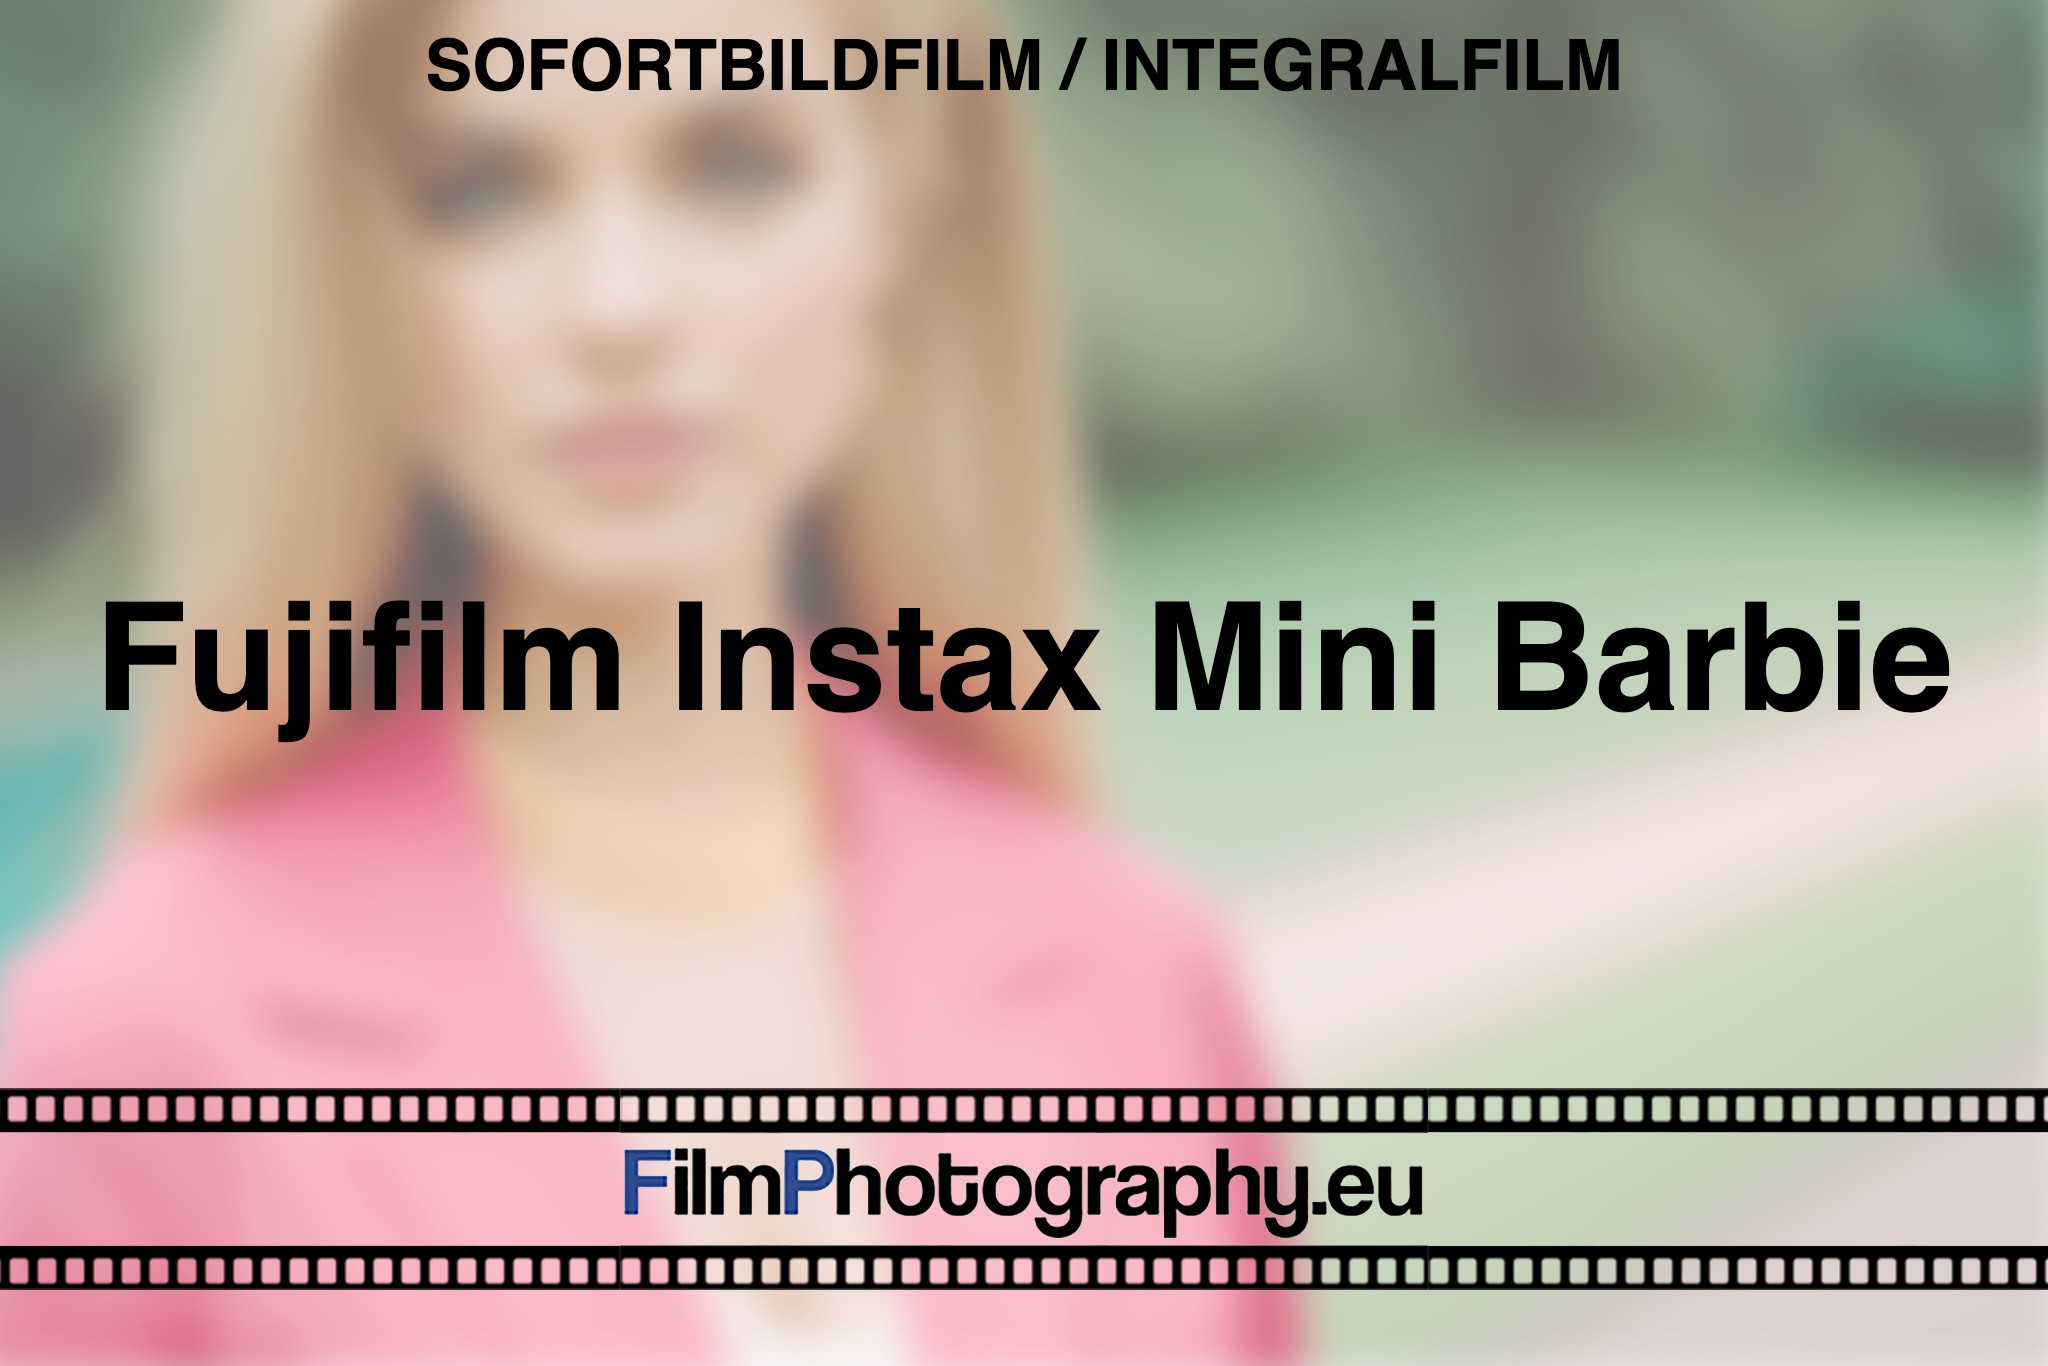 fujifilm-instax-mini-barbie-sofortbildfilm-integralfilm-fp-bnv